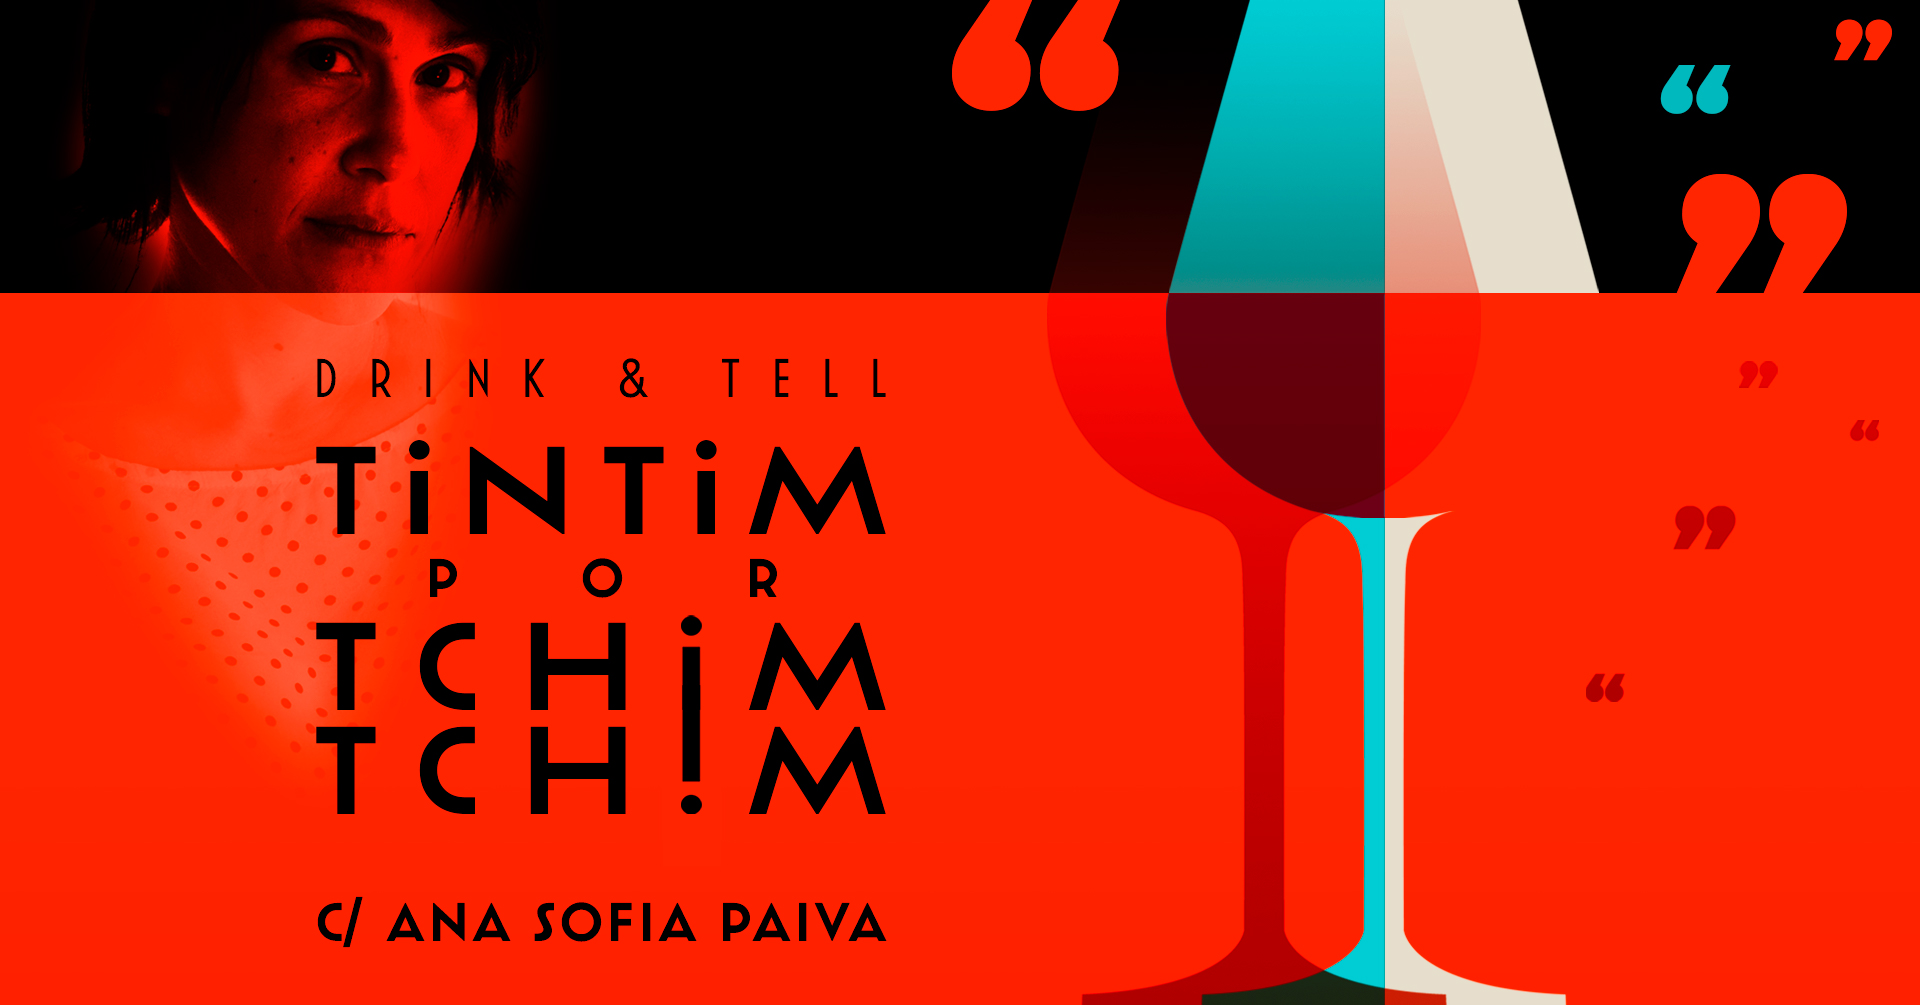 Drink & Tell - Tintim por Tchim-Tchim, com Ana Sofia Paiva